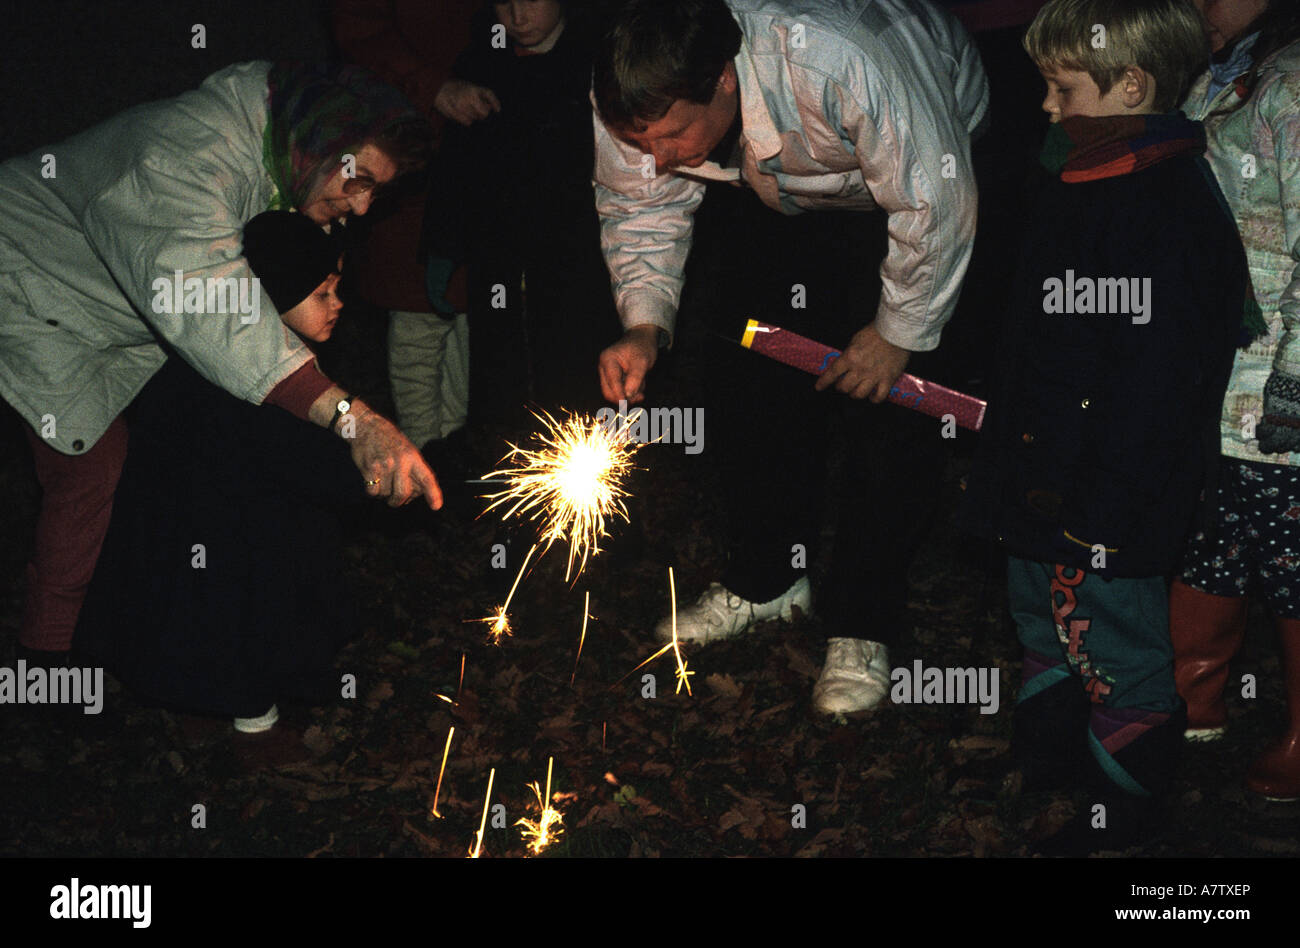 Family celebrating Guy Fawkes night lighting sparklers Stock Photo